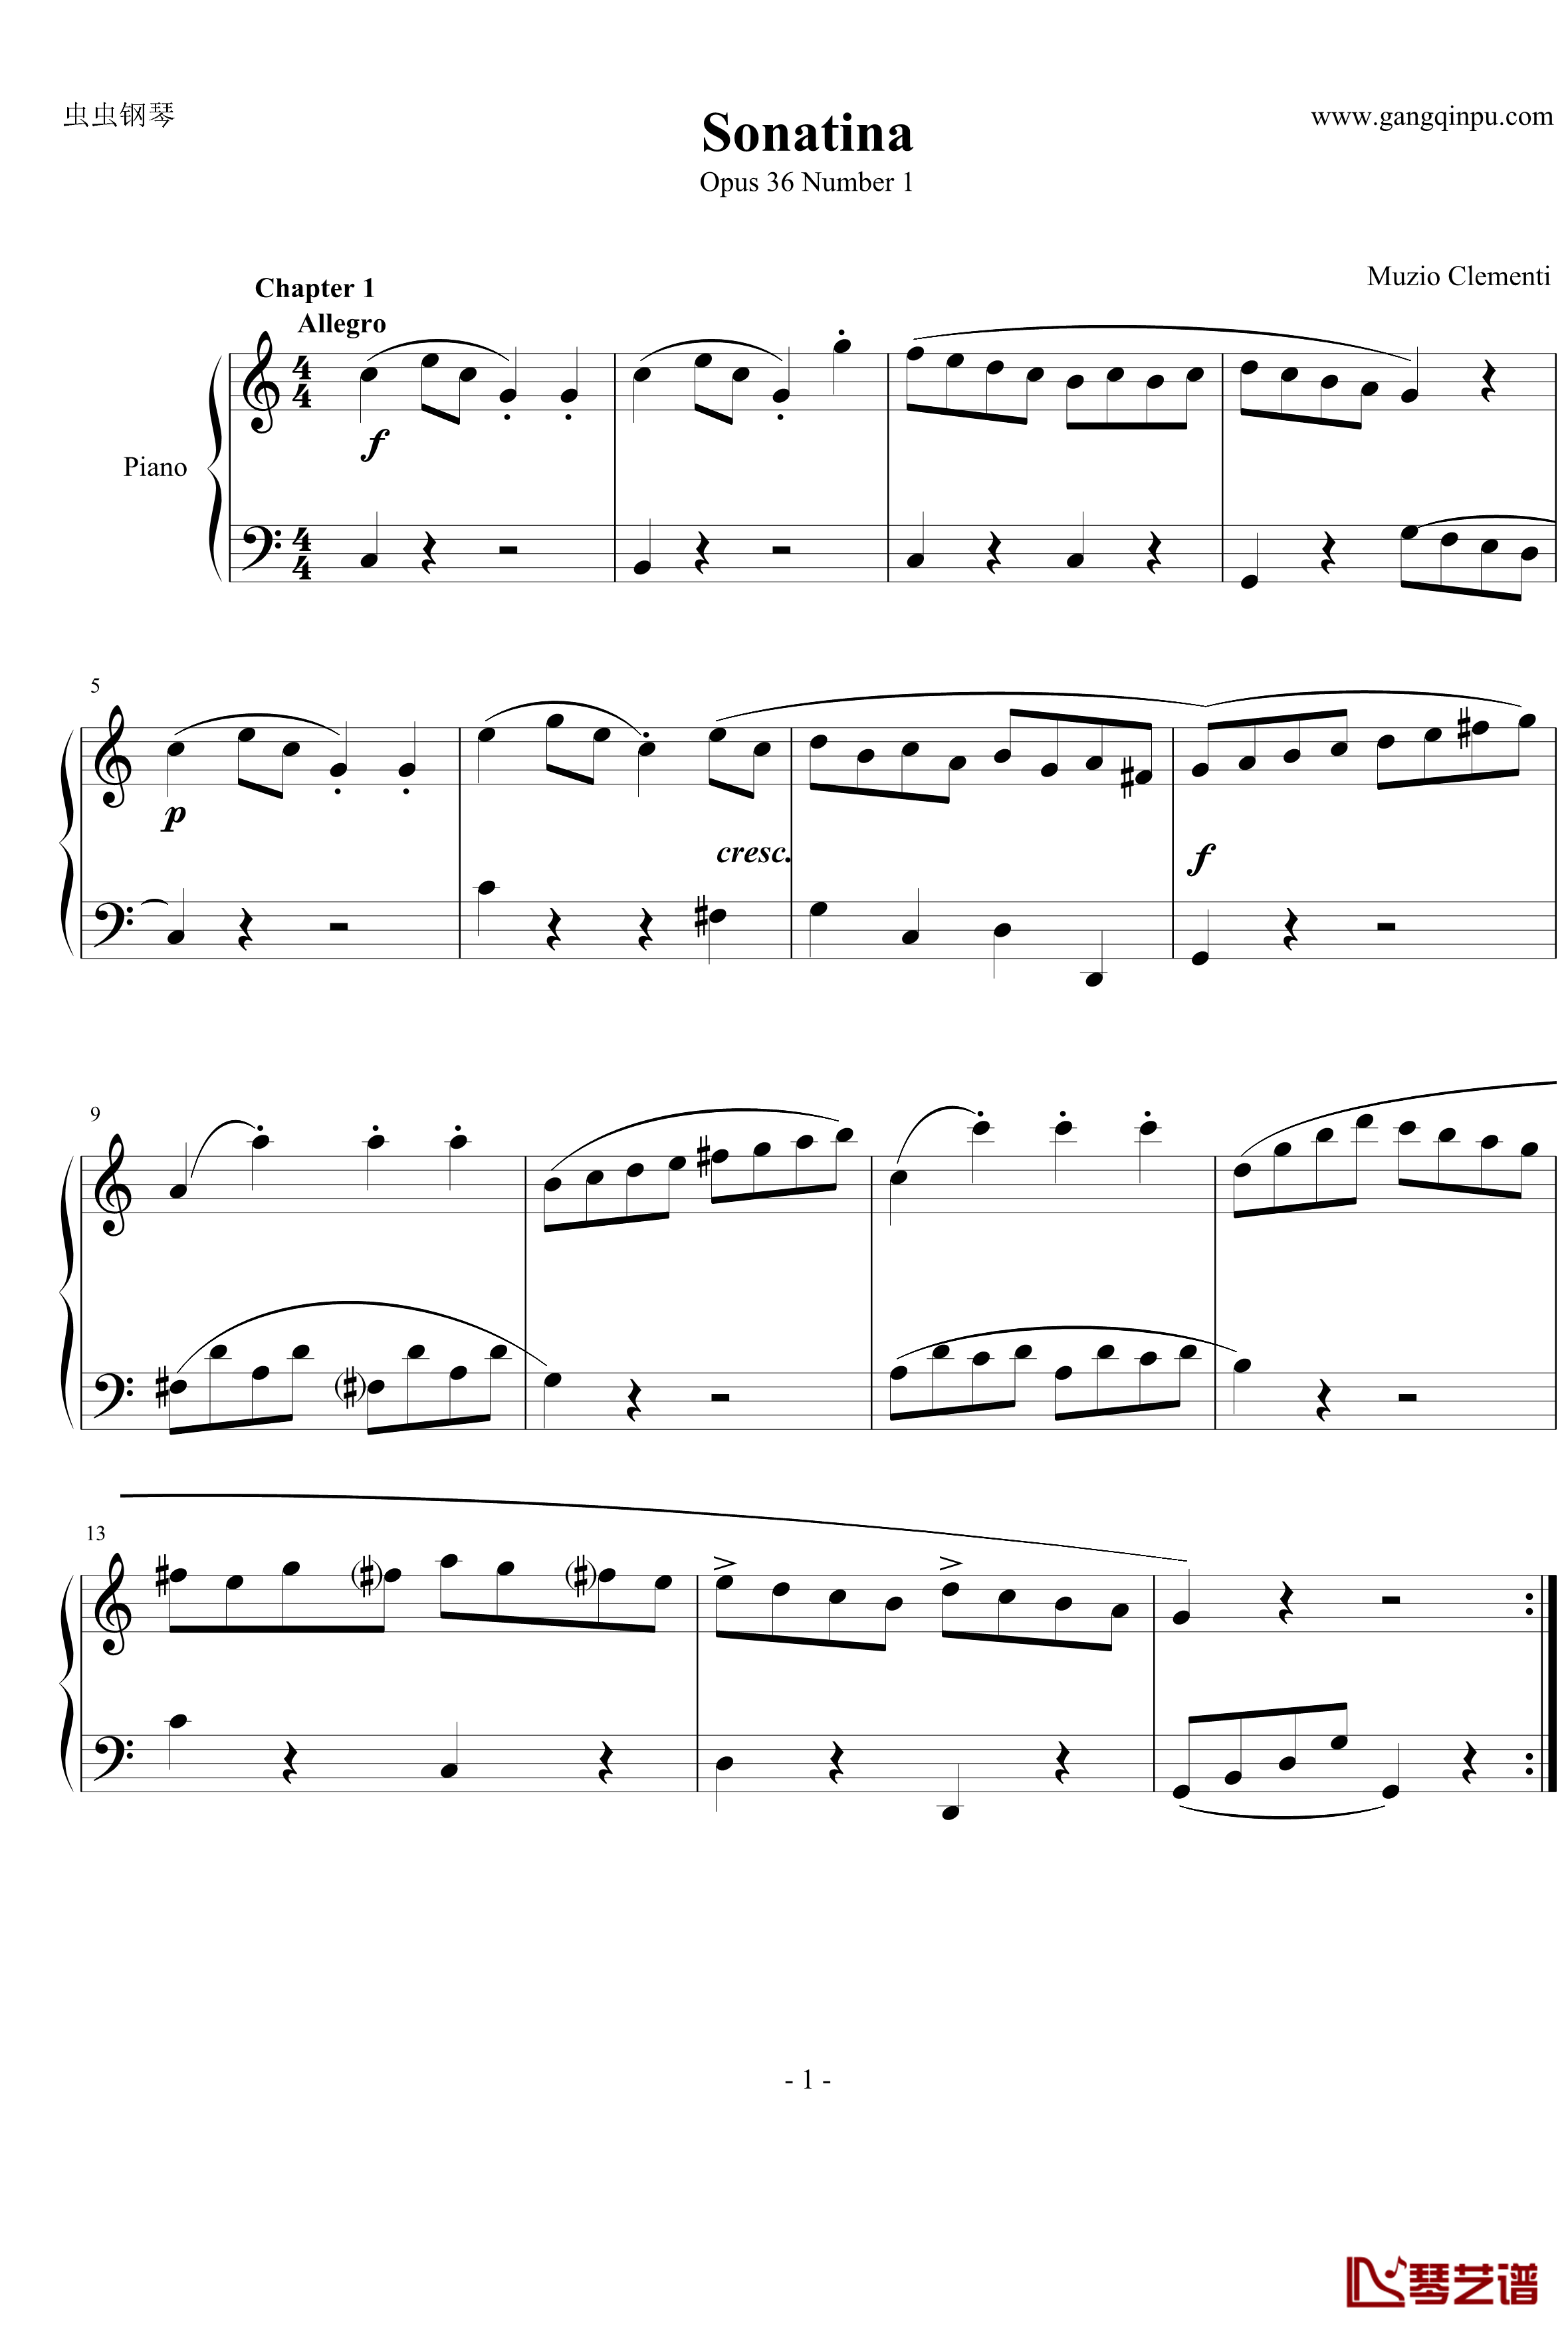 by Muzio ClementiSonatina钢琴谱-Opus 36 Number 1-克来门蒂1